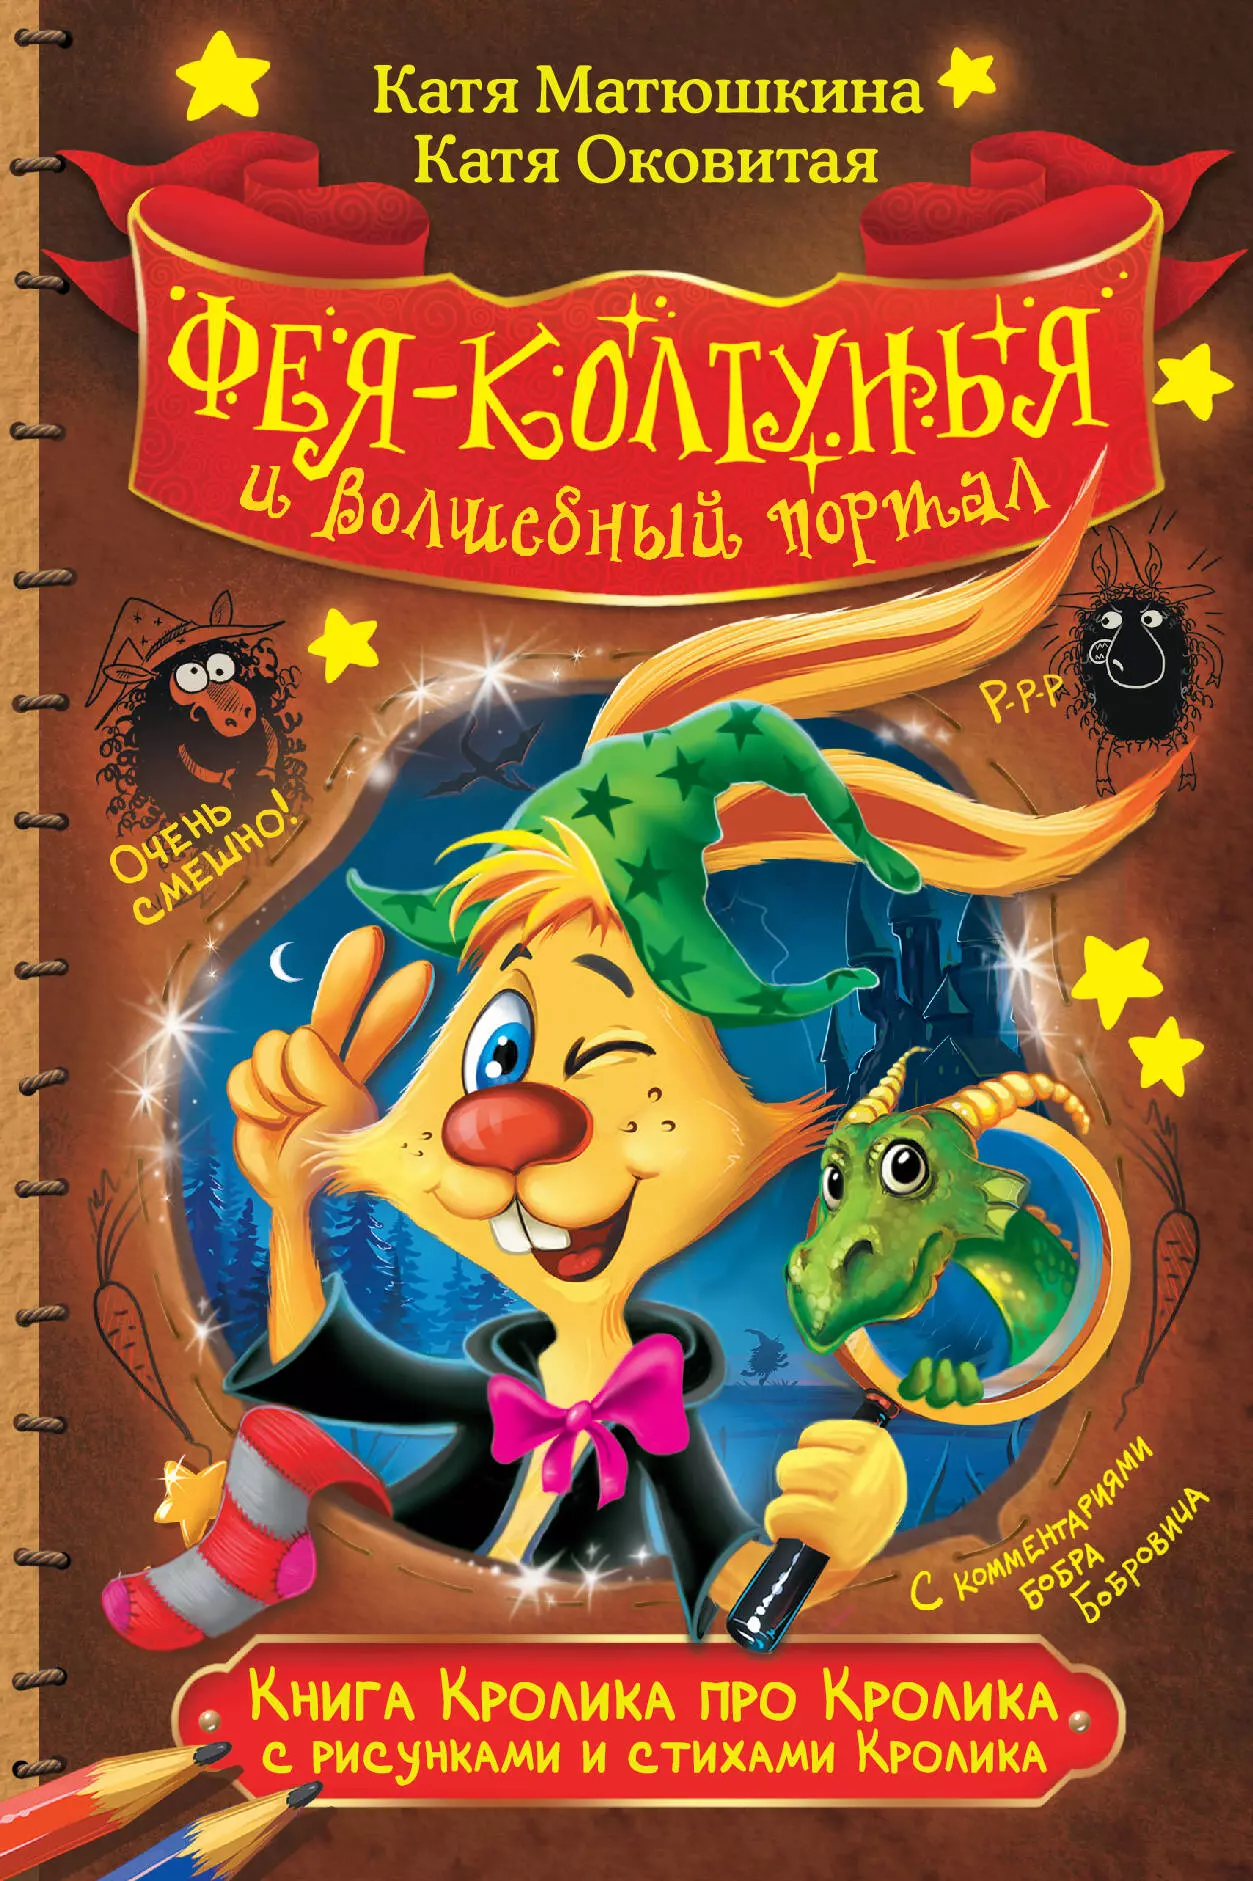 Матюшкина Екатерина Александровна Книга Кролика про Кролика со стихами и рисунками Кролика